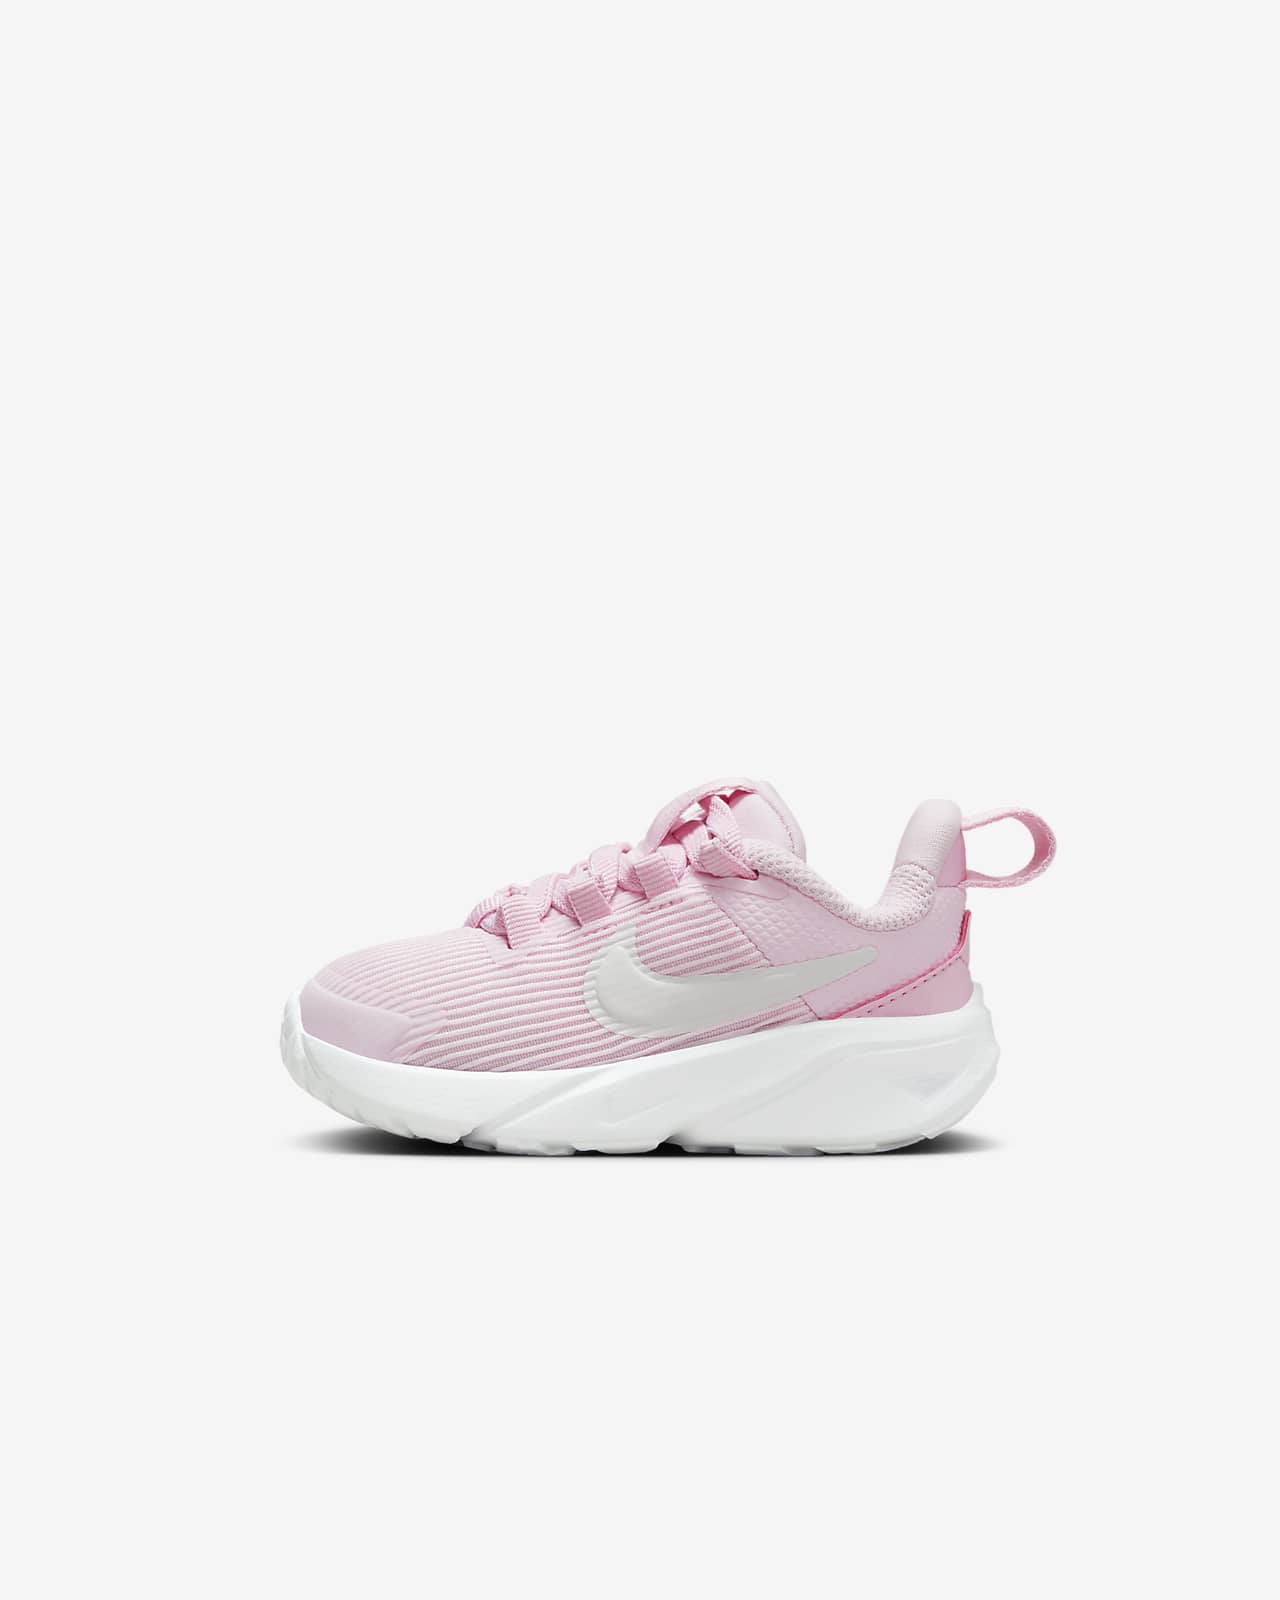 Nike Star Runner 4 Shoes. Baby/Toddler